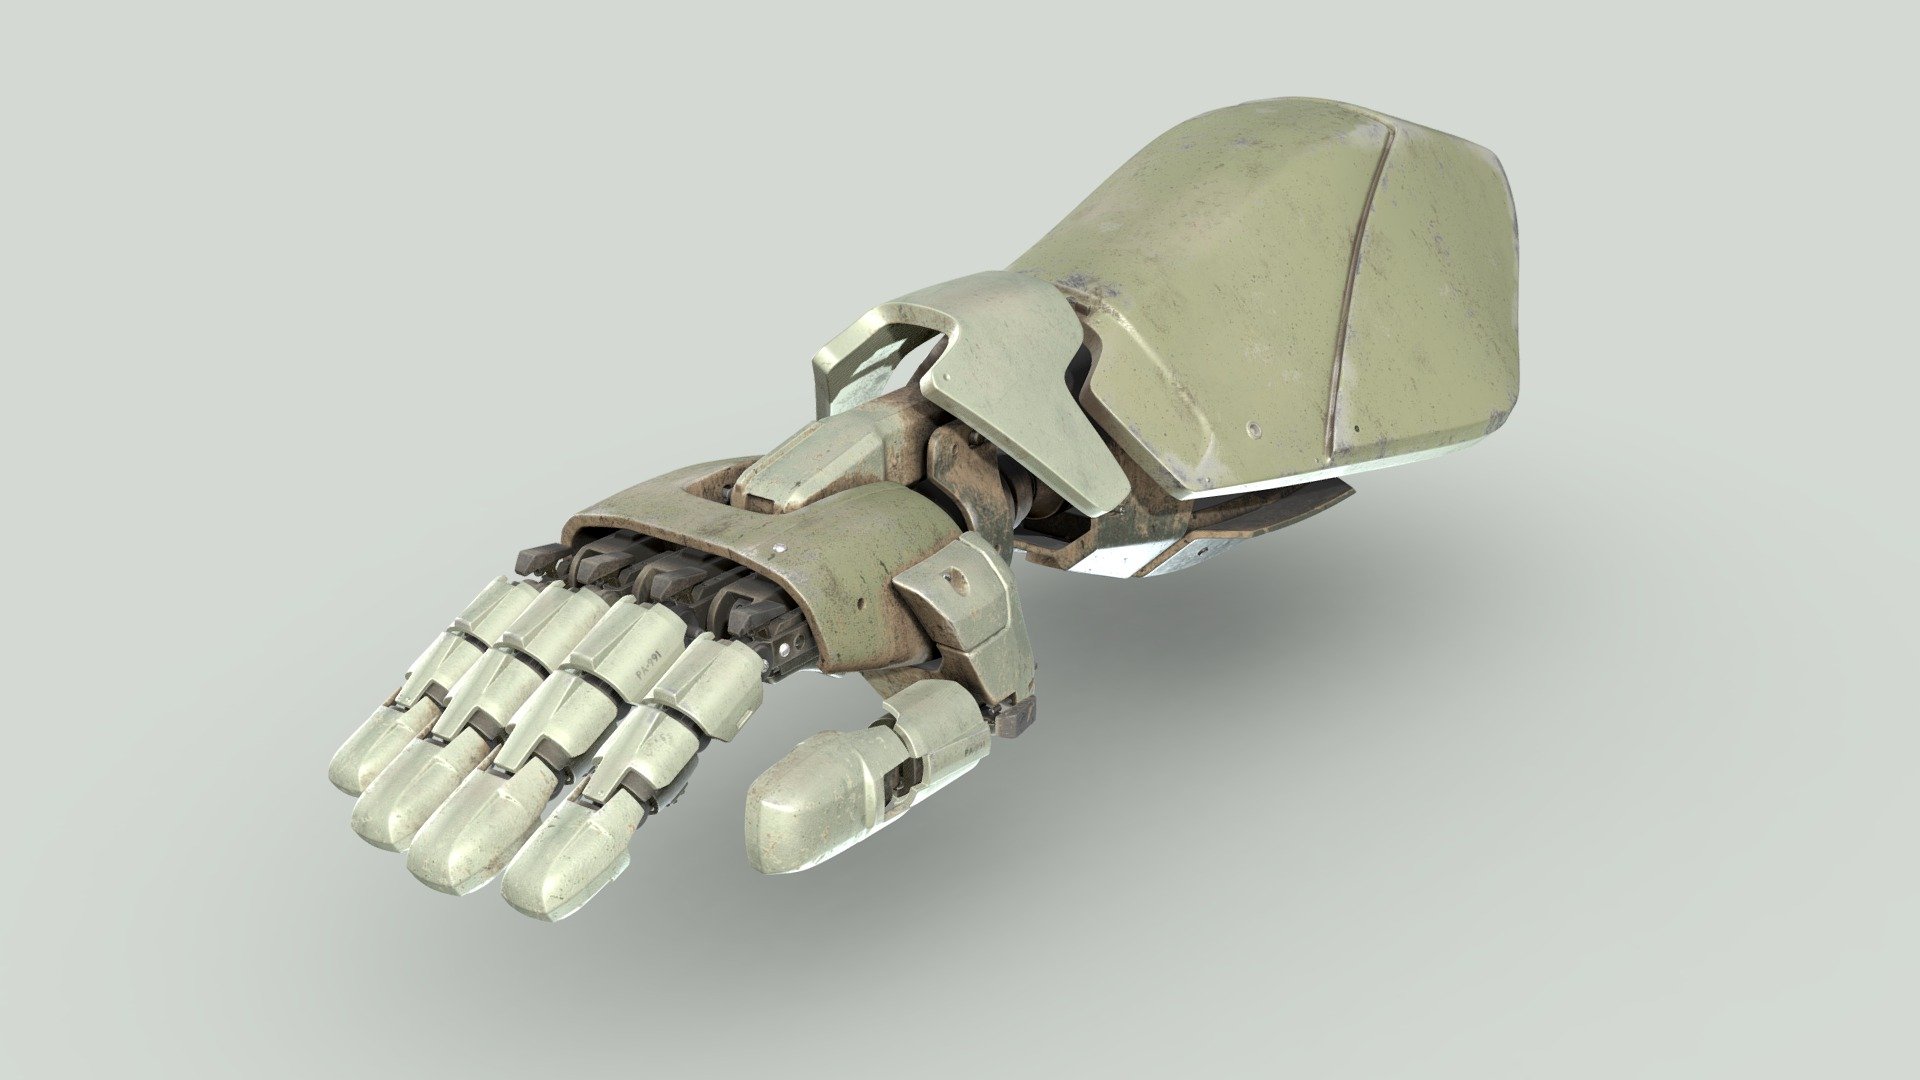 Robotic power arm

Hipoly model

4 x 2K PBR Textures - Robotic Power Arm - Buy Royalty Free 3D model by l0wpoly 3d model